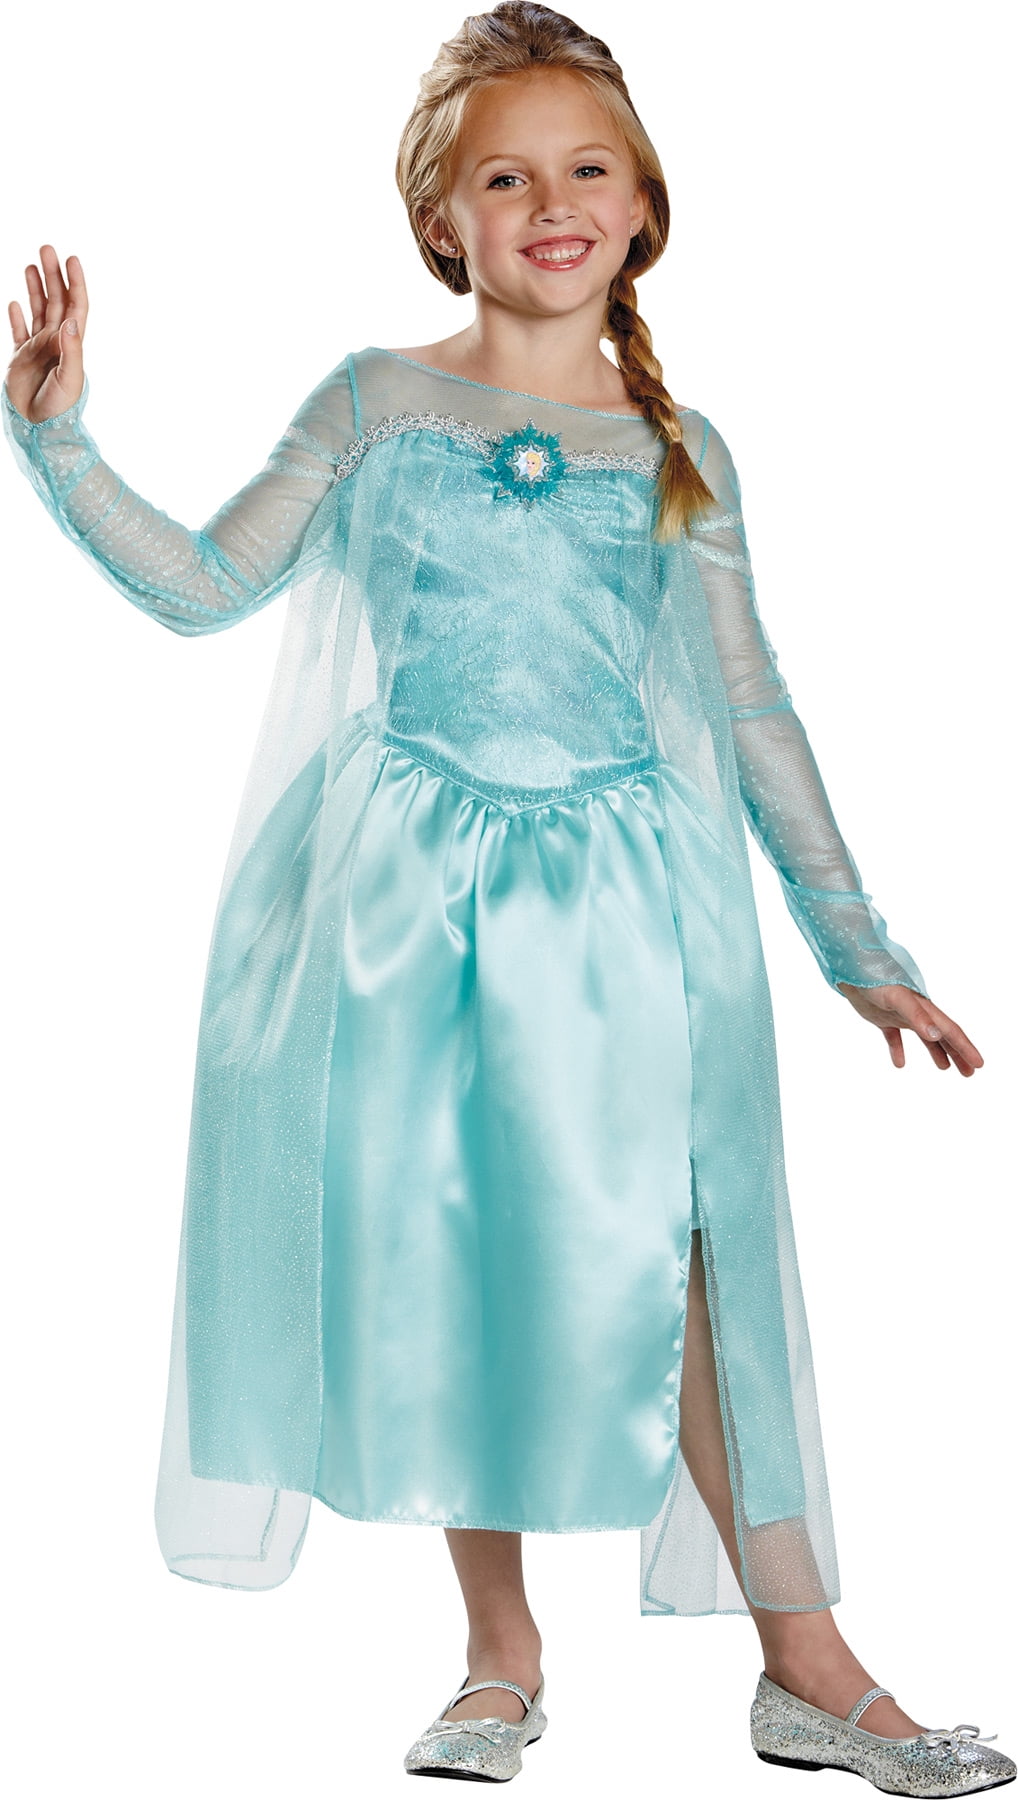 Little Adventures Ice Princess Queen Costume Dress Up 9-11 Years 